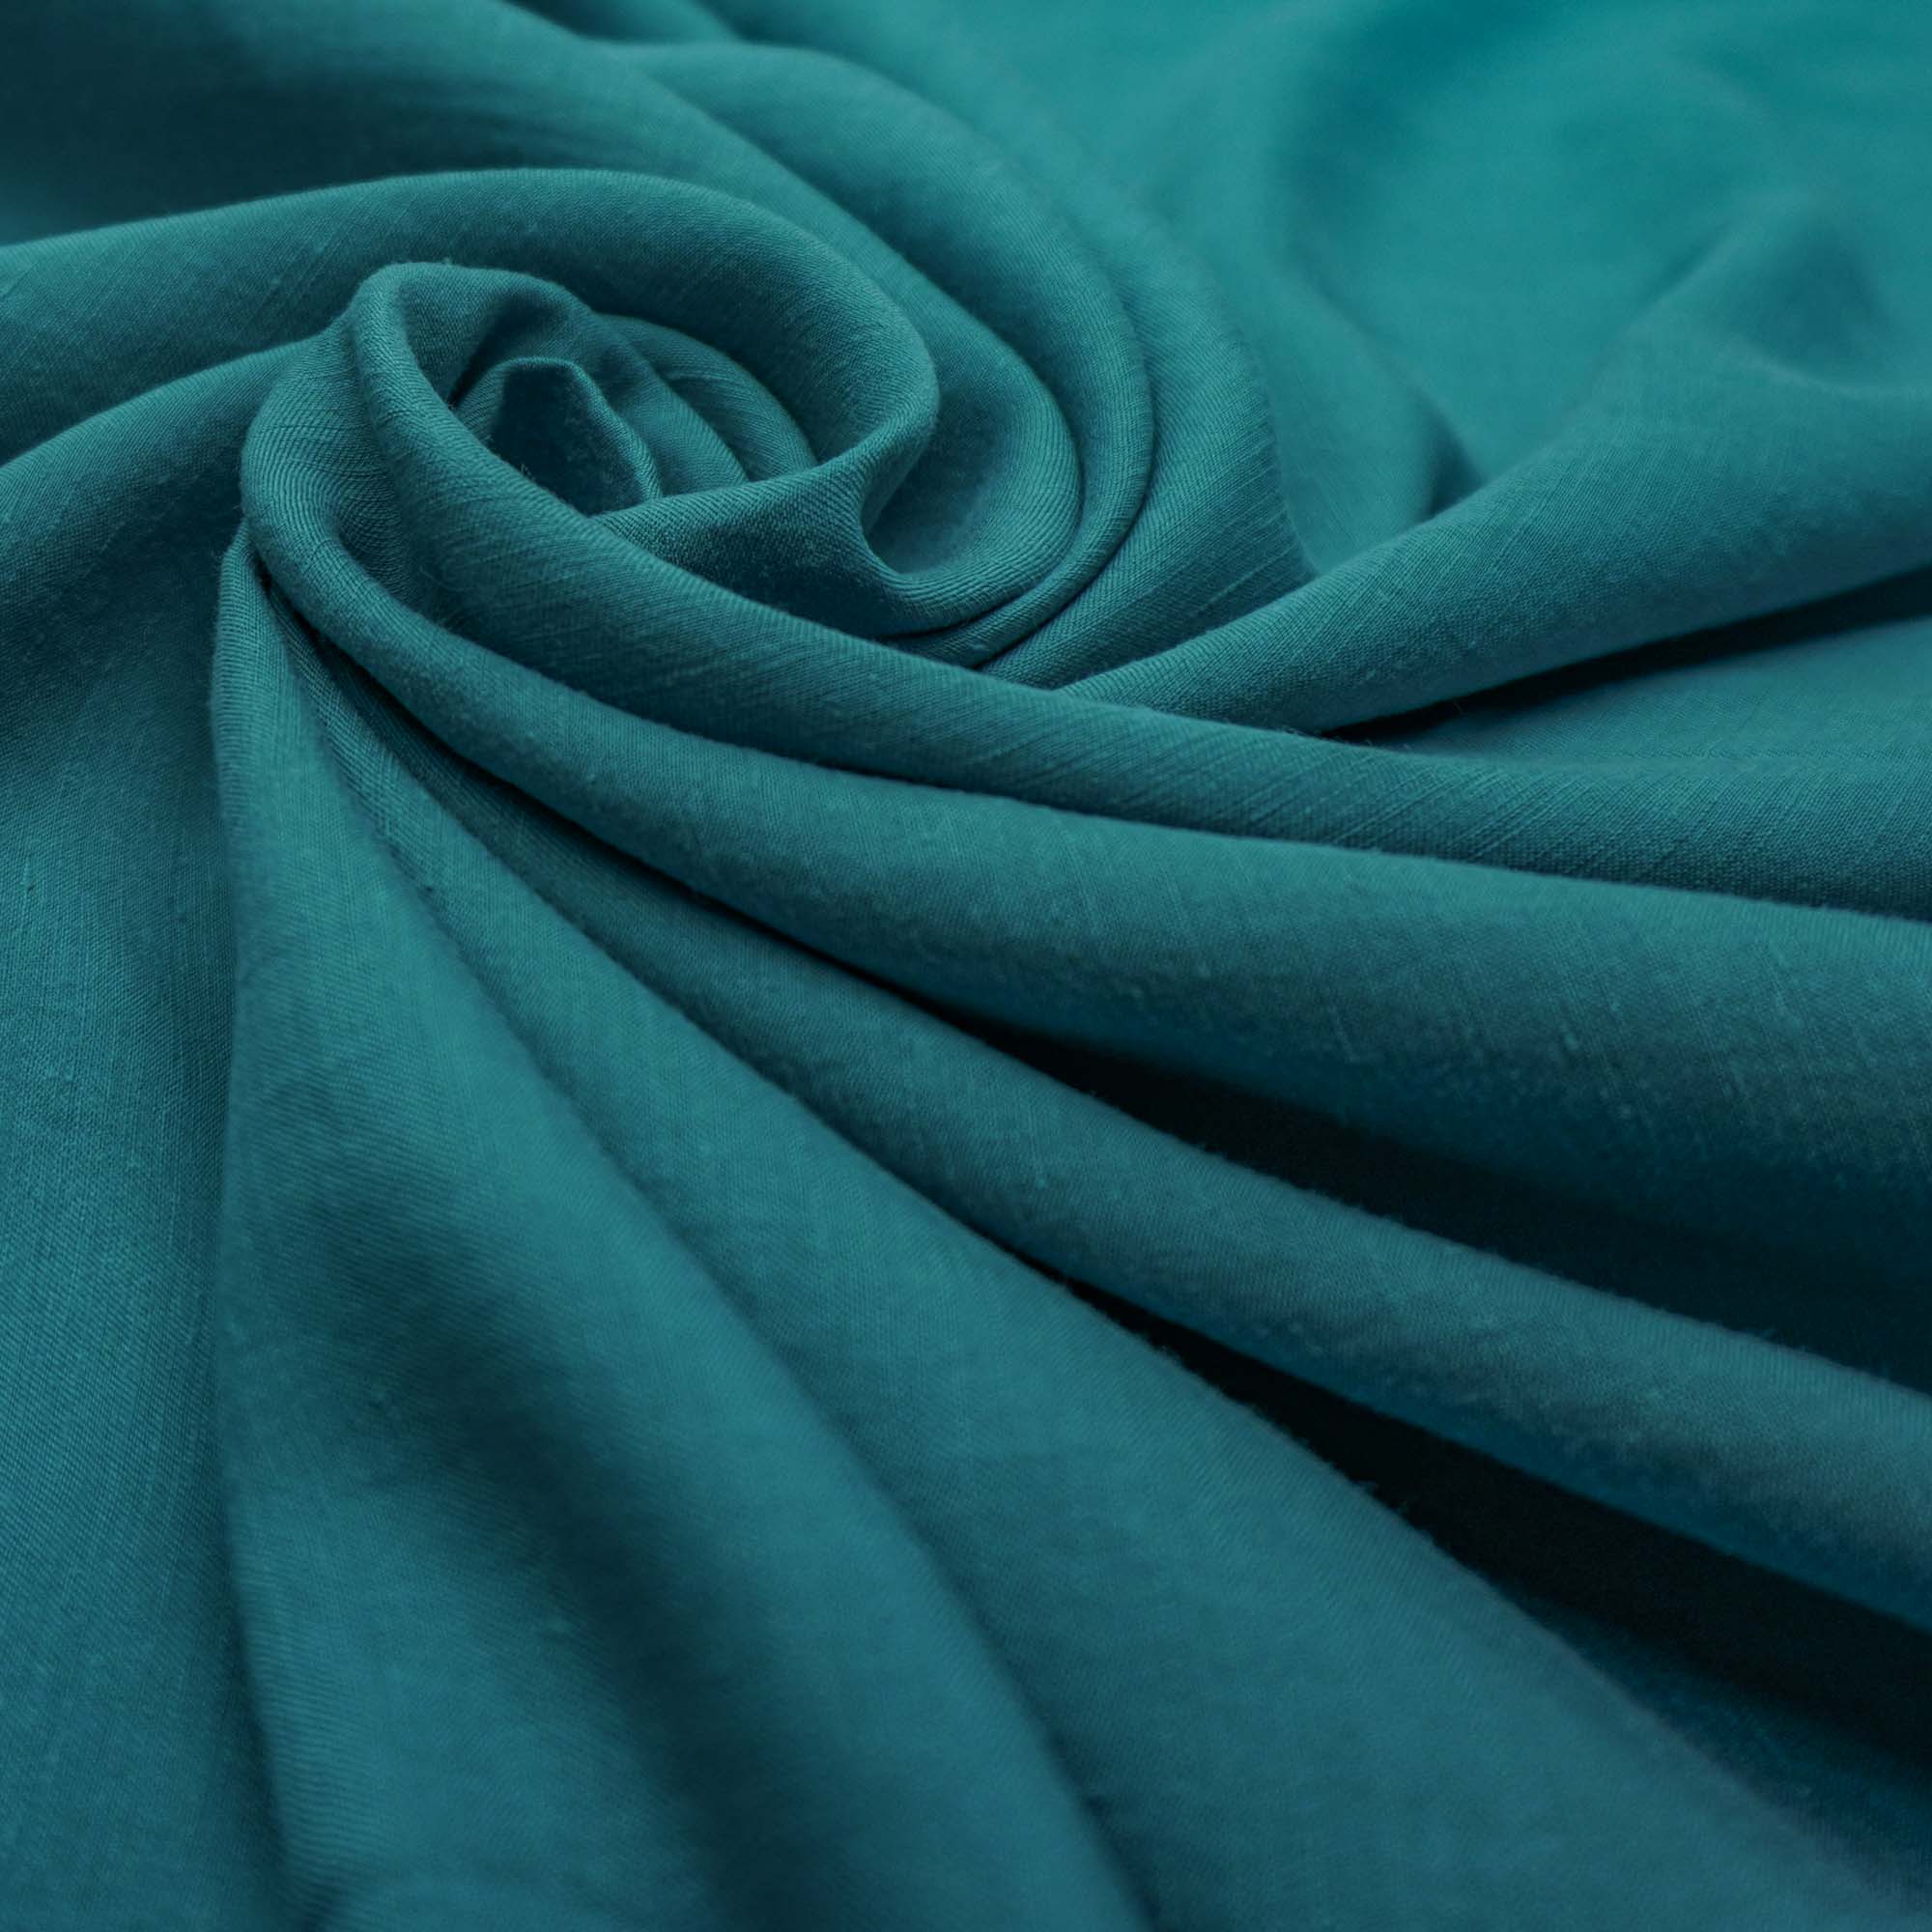 Tecido linho misto verde turquesa (tecido italiano legítimo)